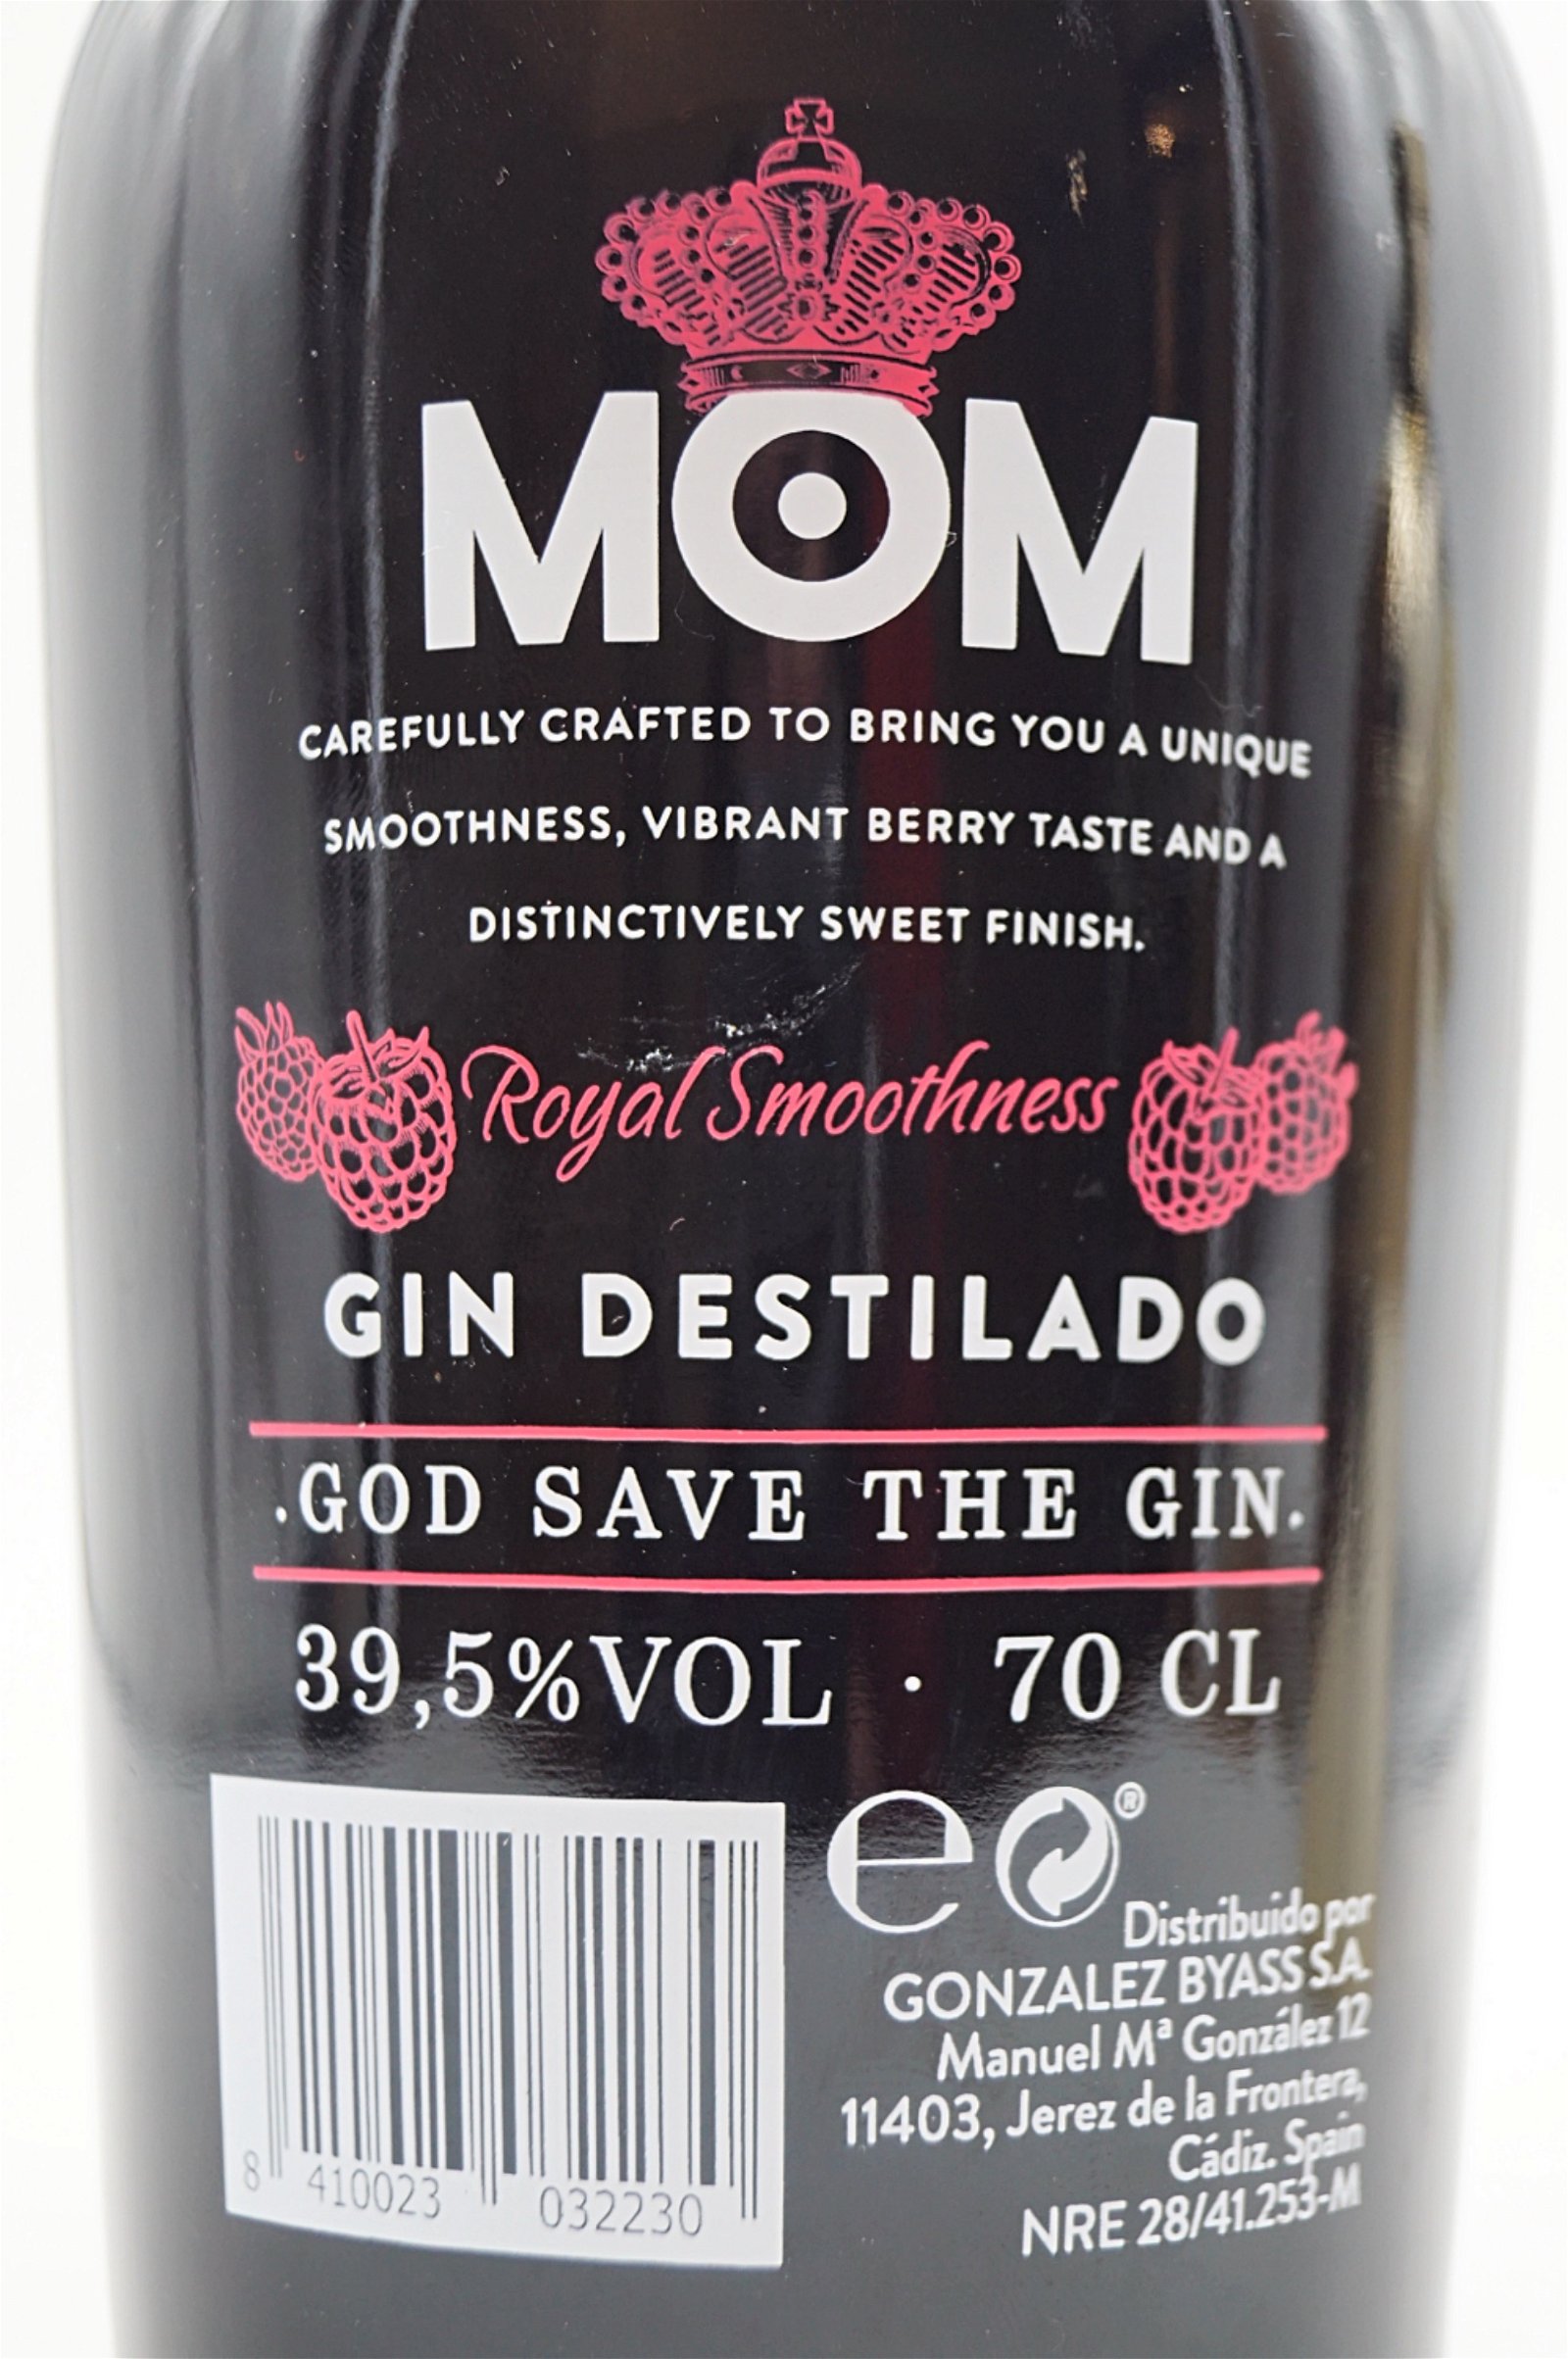 MOM Gin Royal Smoothness